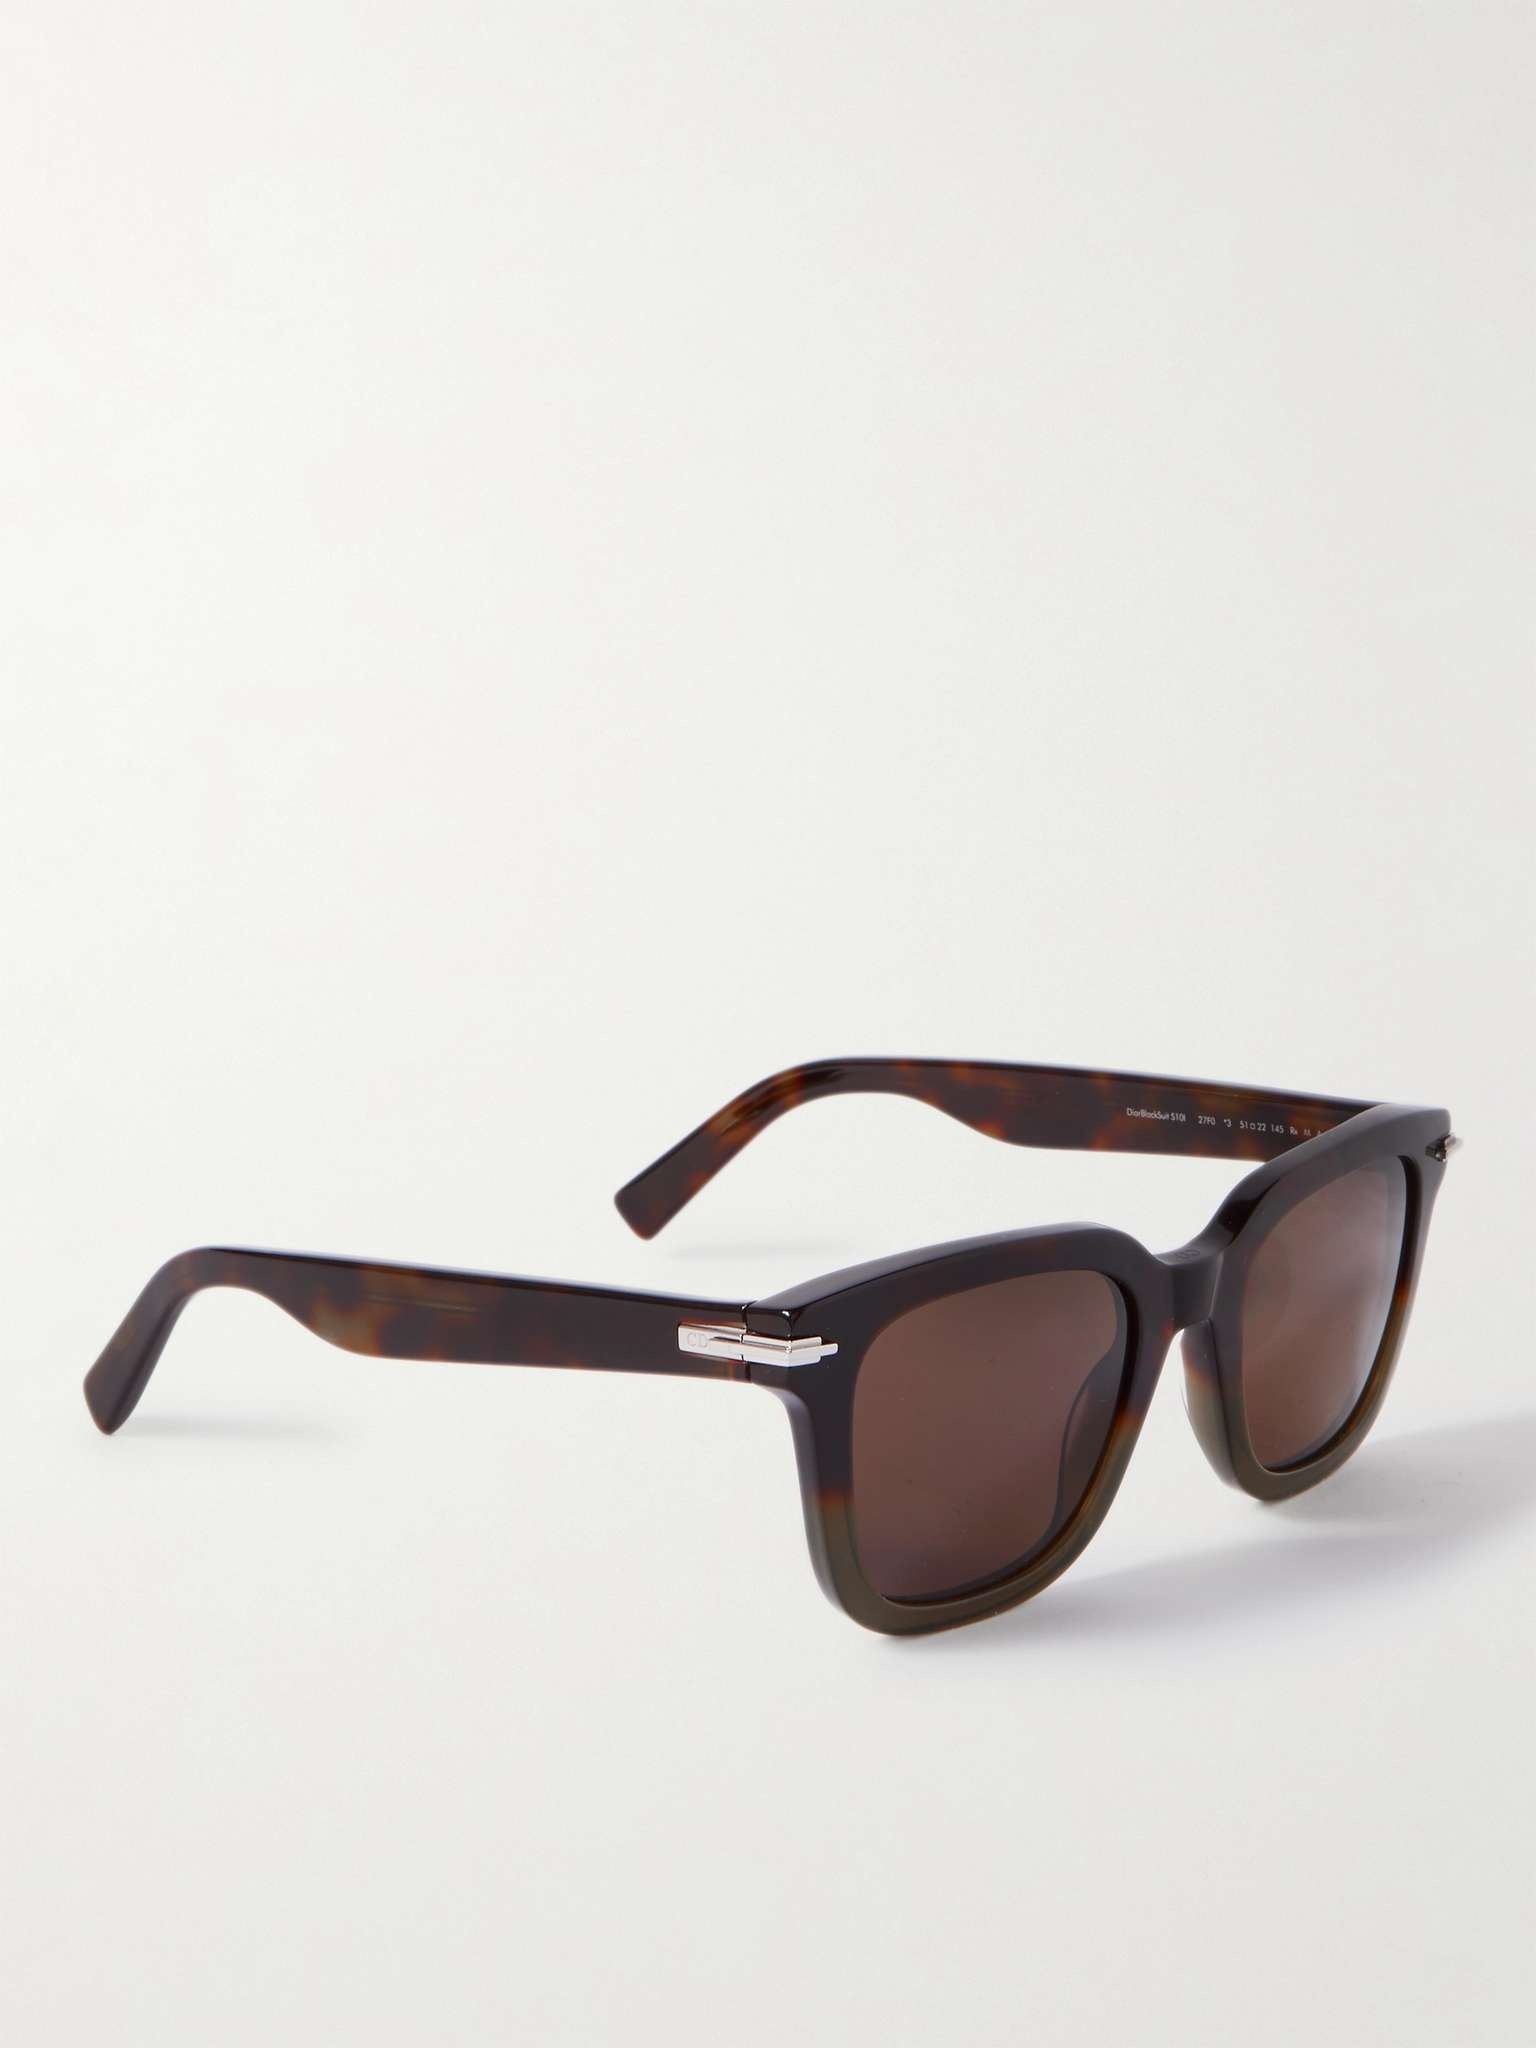 DiorBlackSuit S10I D-Frame Acetate Sunglasses - 3